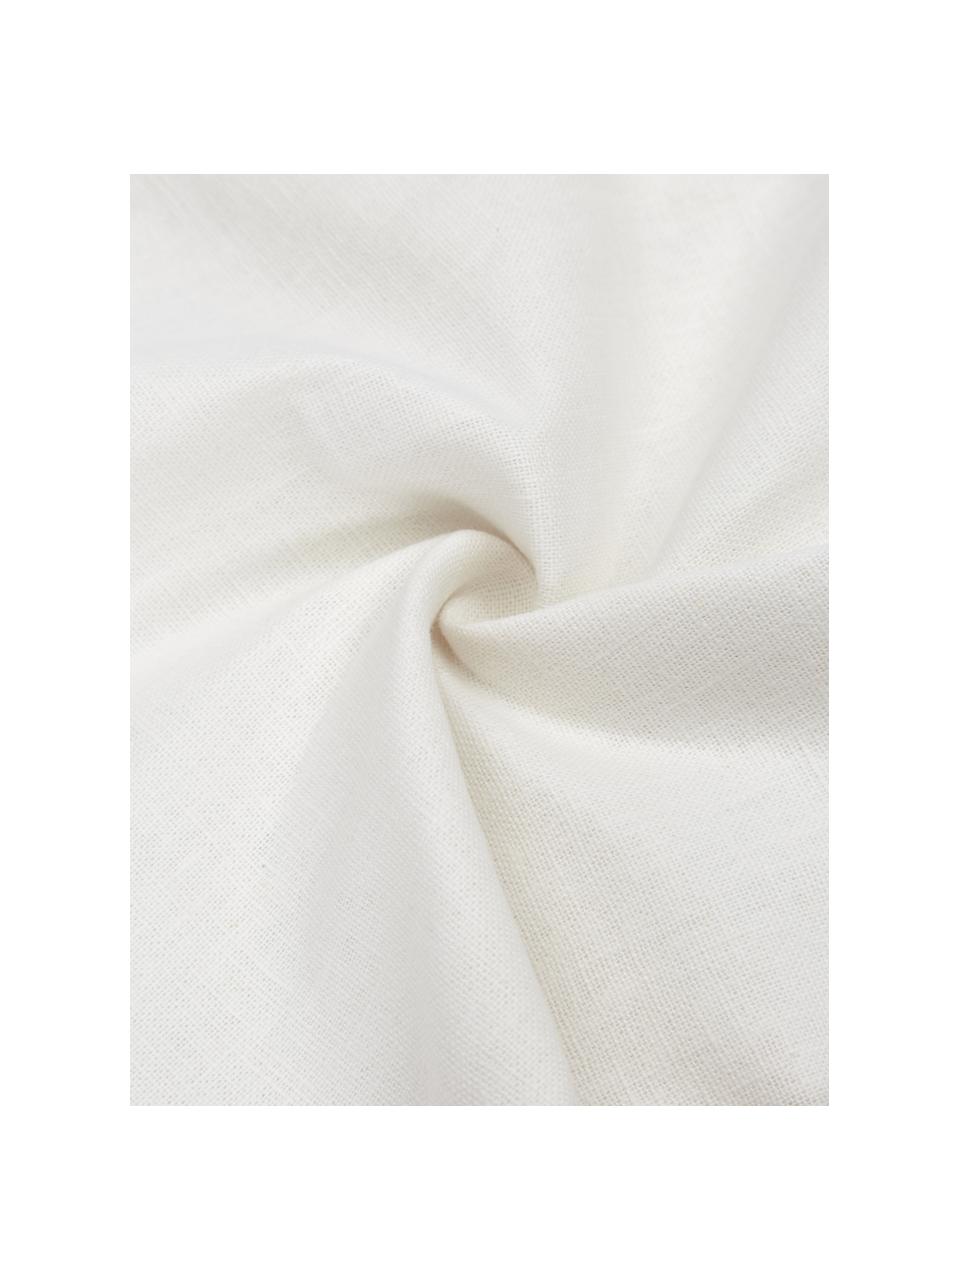 Lněný povlak na polštář Mira, 51 % len, 49 % bavlna, Bílá, Š 30 cm, D 50 cm